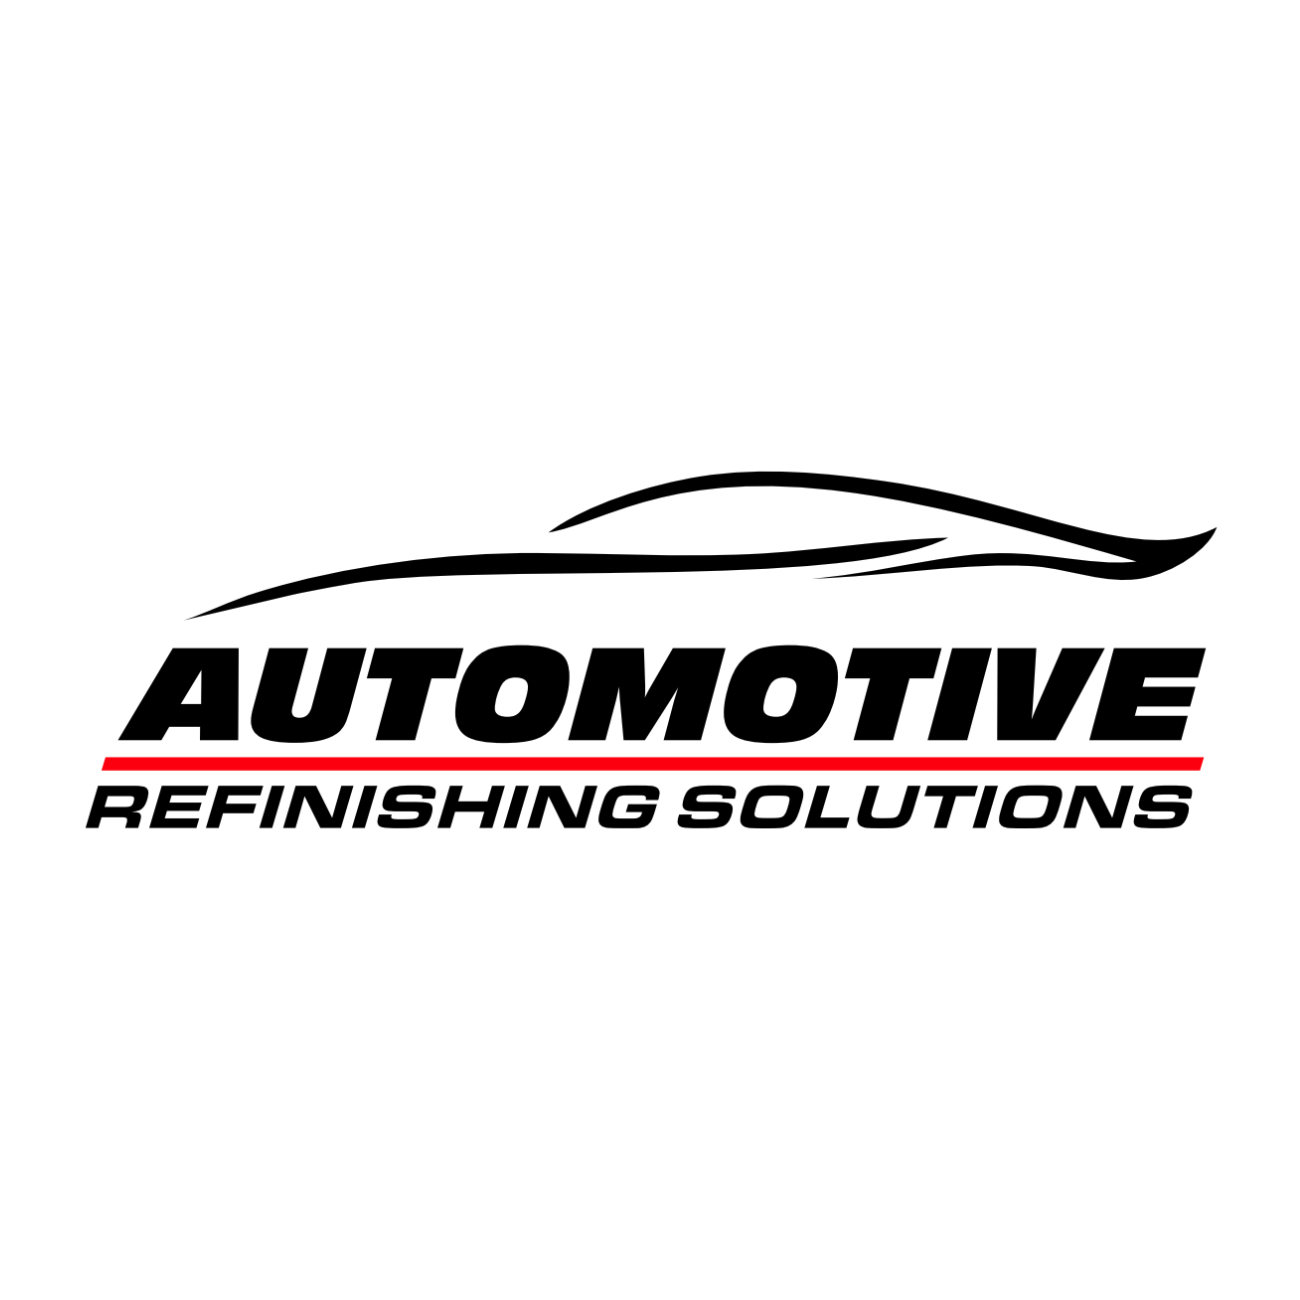 Automotive Refinishing Solutions